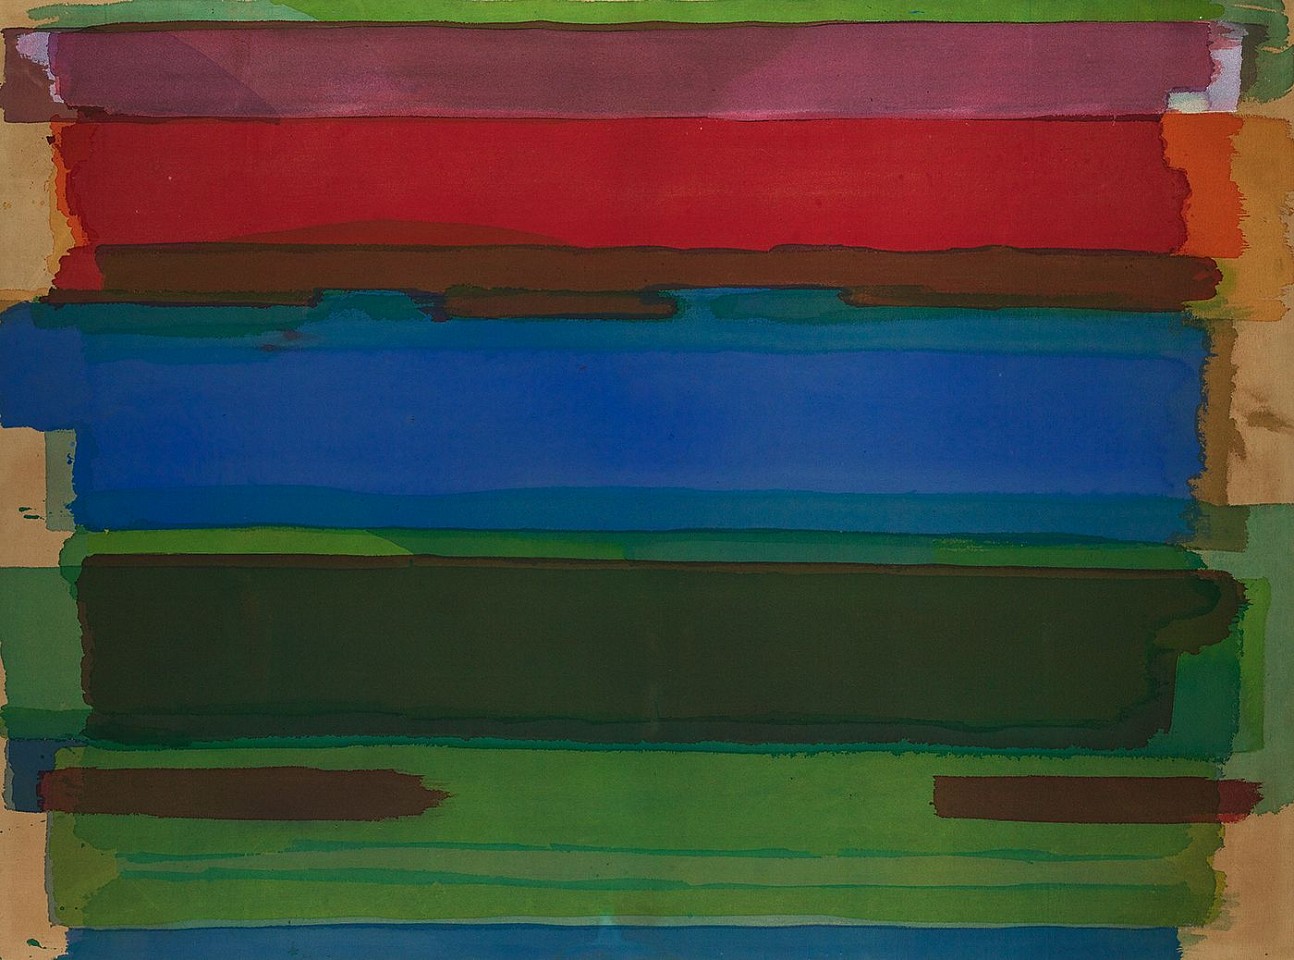 Edwin Ruda, Tunis, 1969
Acrylic on canvas, 48 x 66 in. (121.9 x 167.6 cm)
RUD-00019